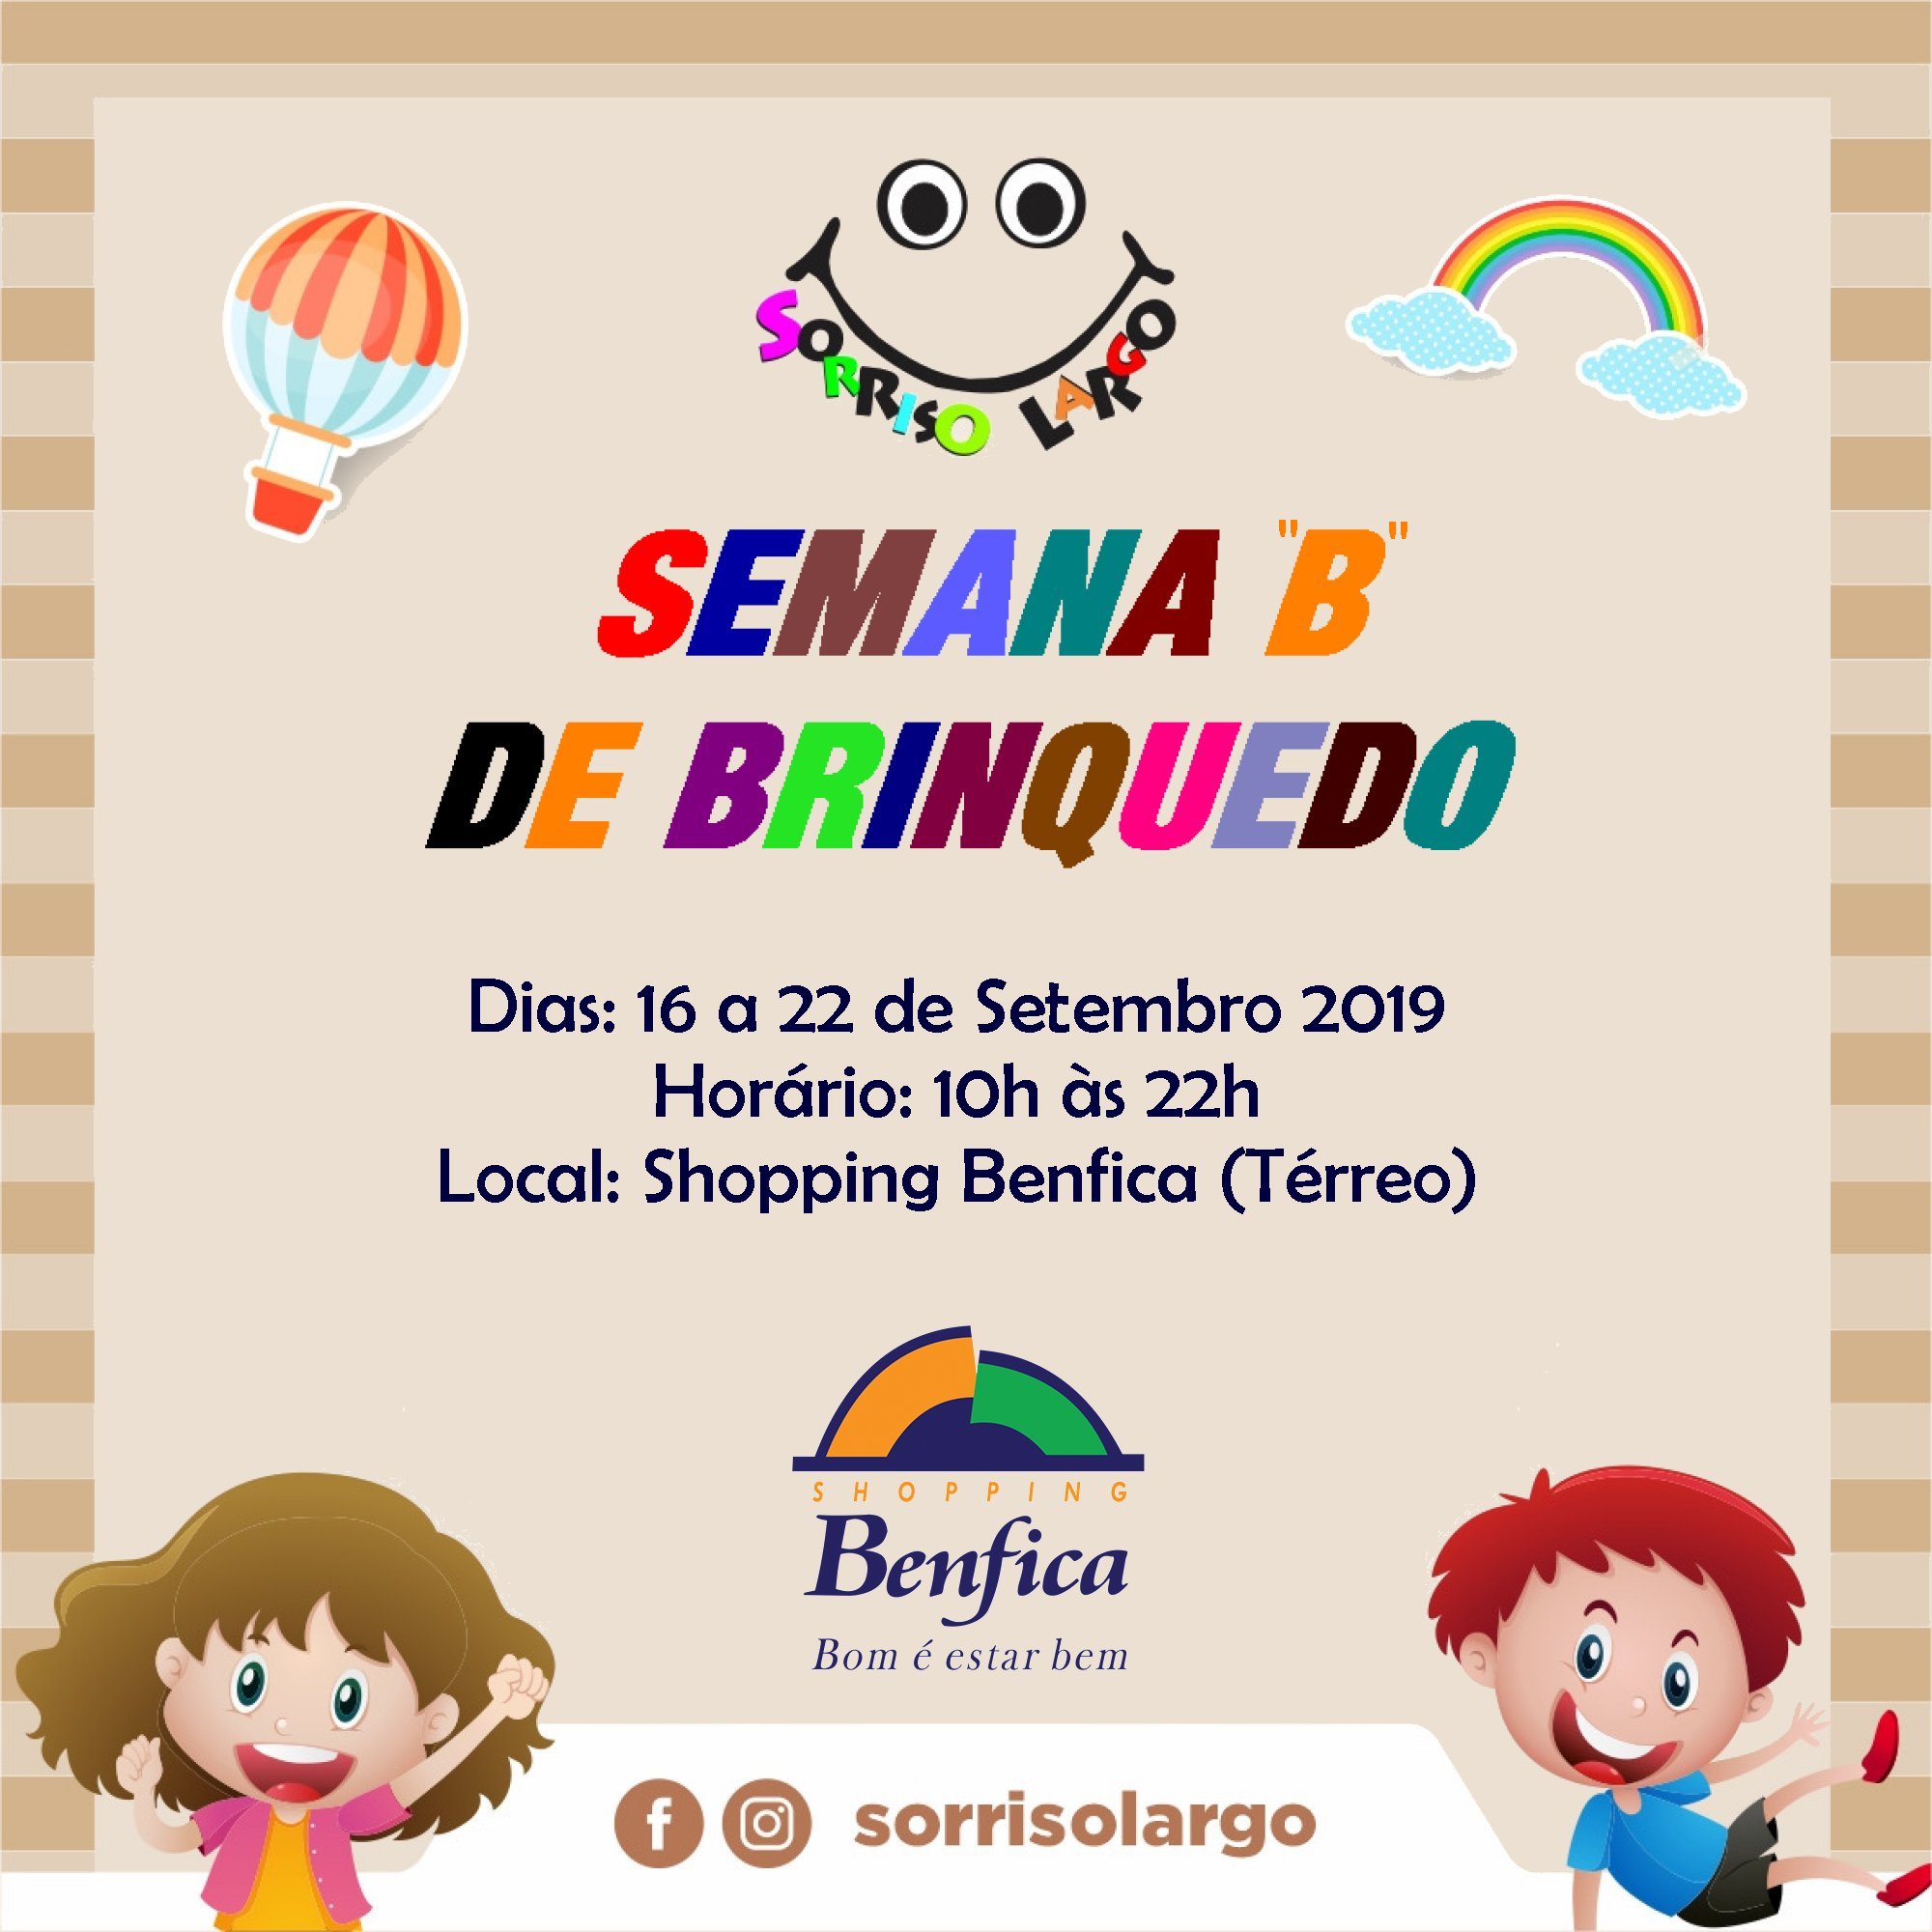 Campanha Sorriso Largo promove a Semana “B” de Brinquedo de 16 a 22 de setembro no Shopping Benfica